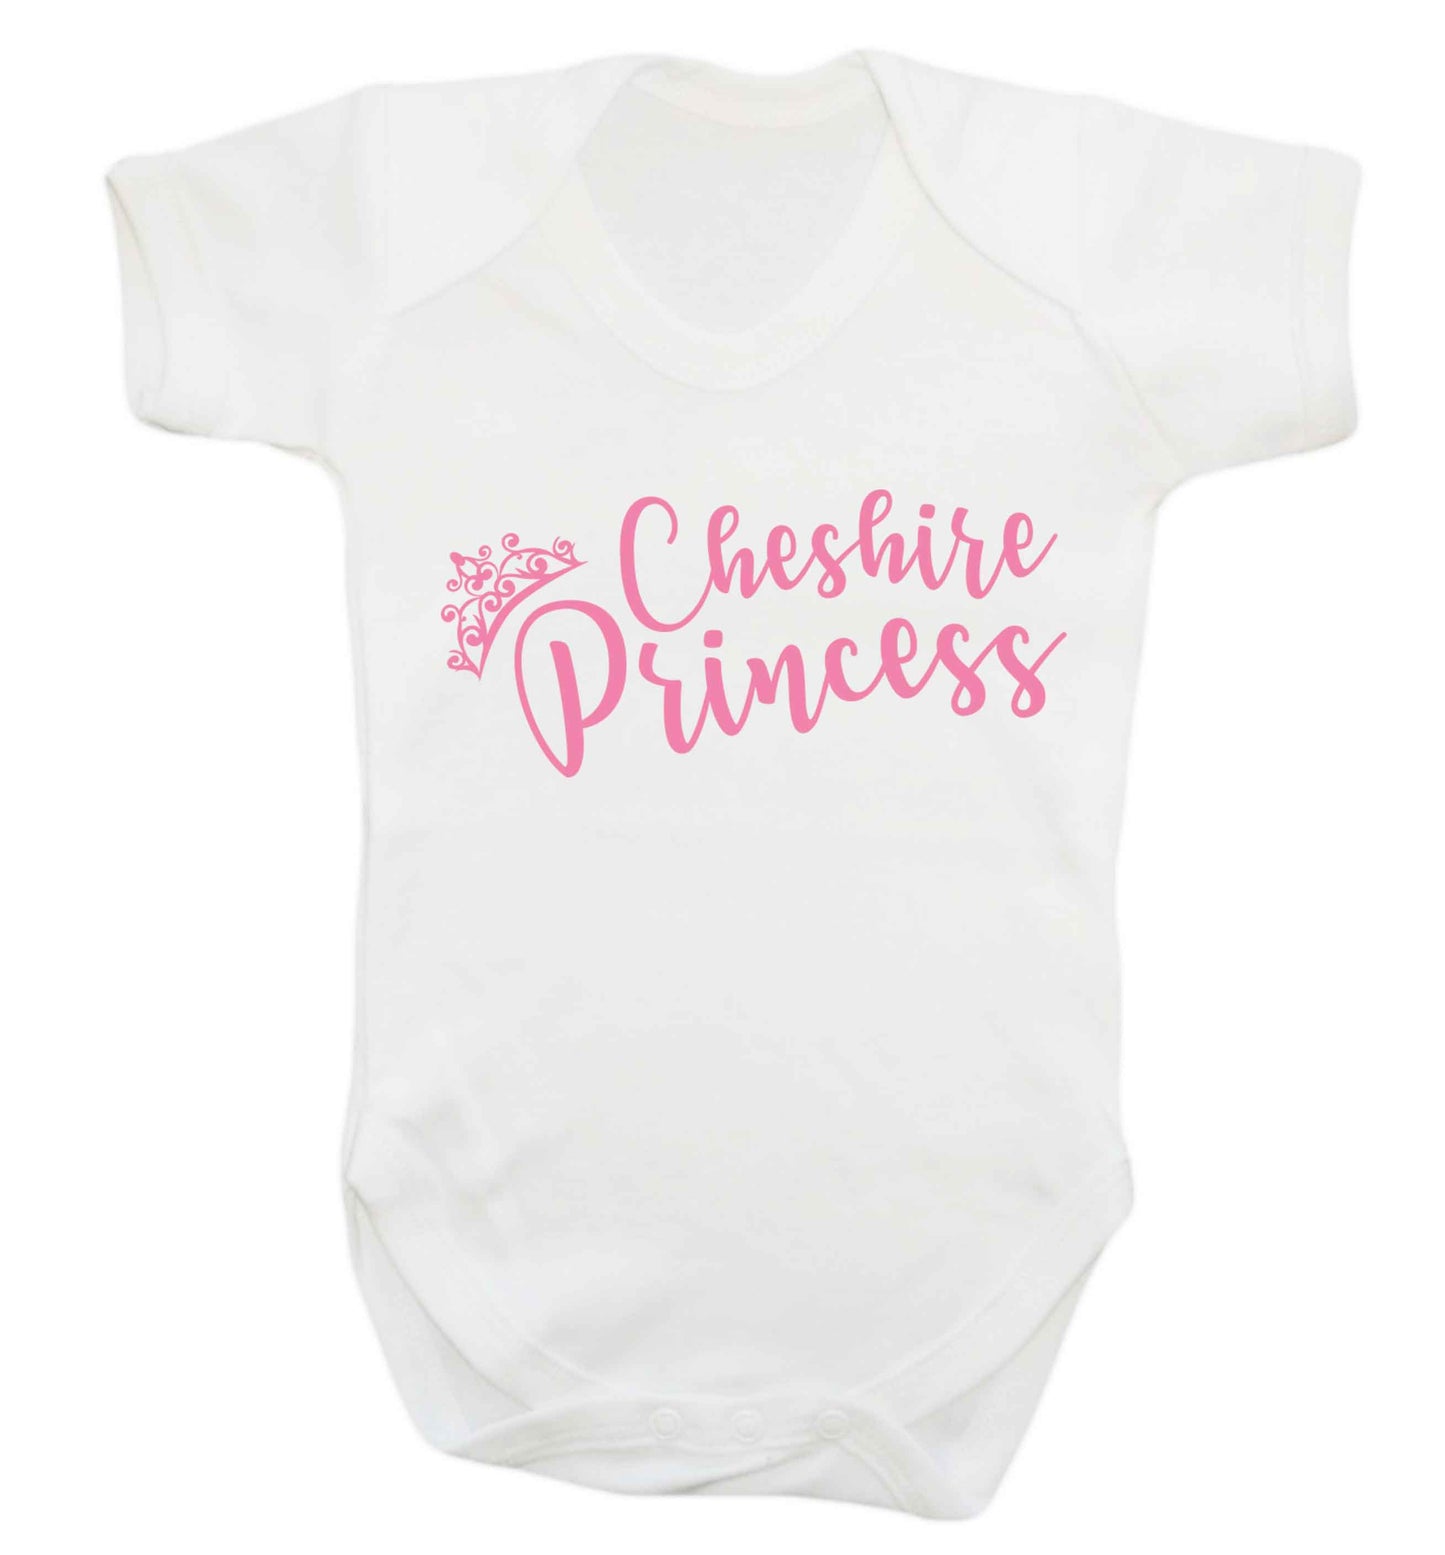 Cheshire princess Baby Vest white 18-24 months